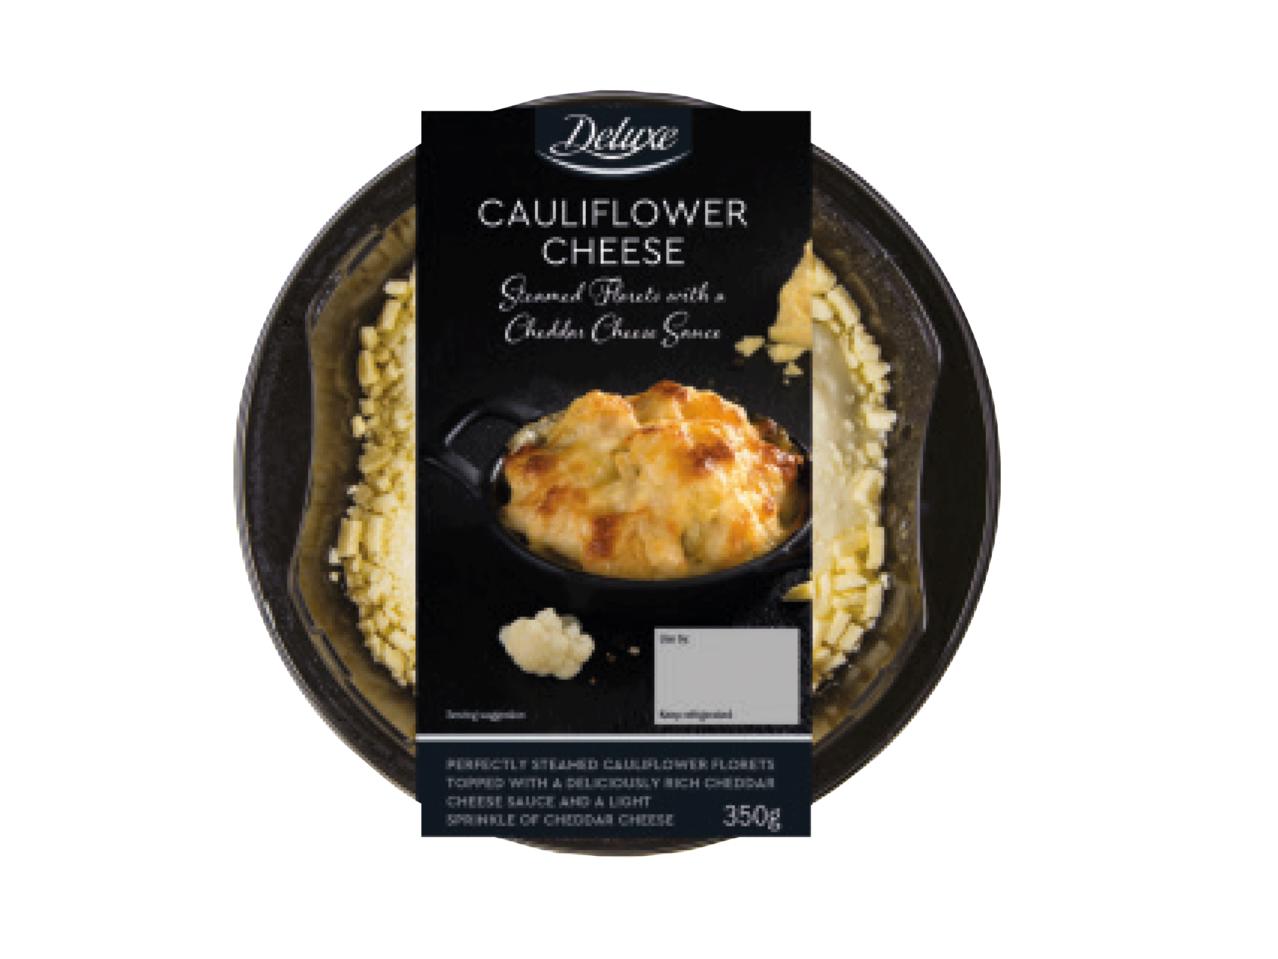 DELUXE Cauliflower Cheese